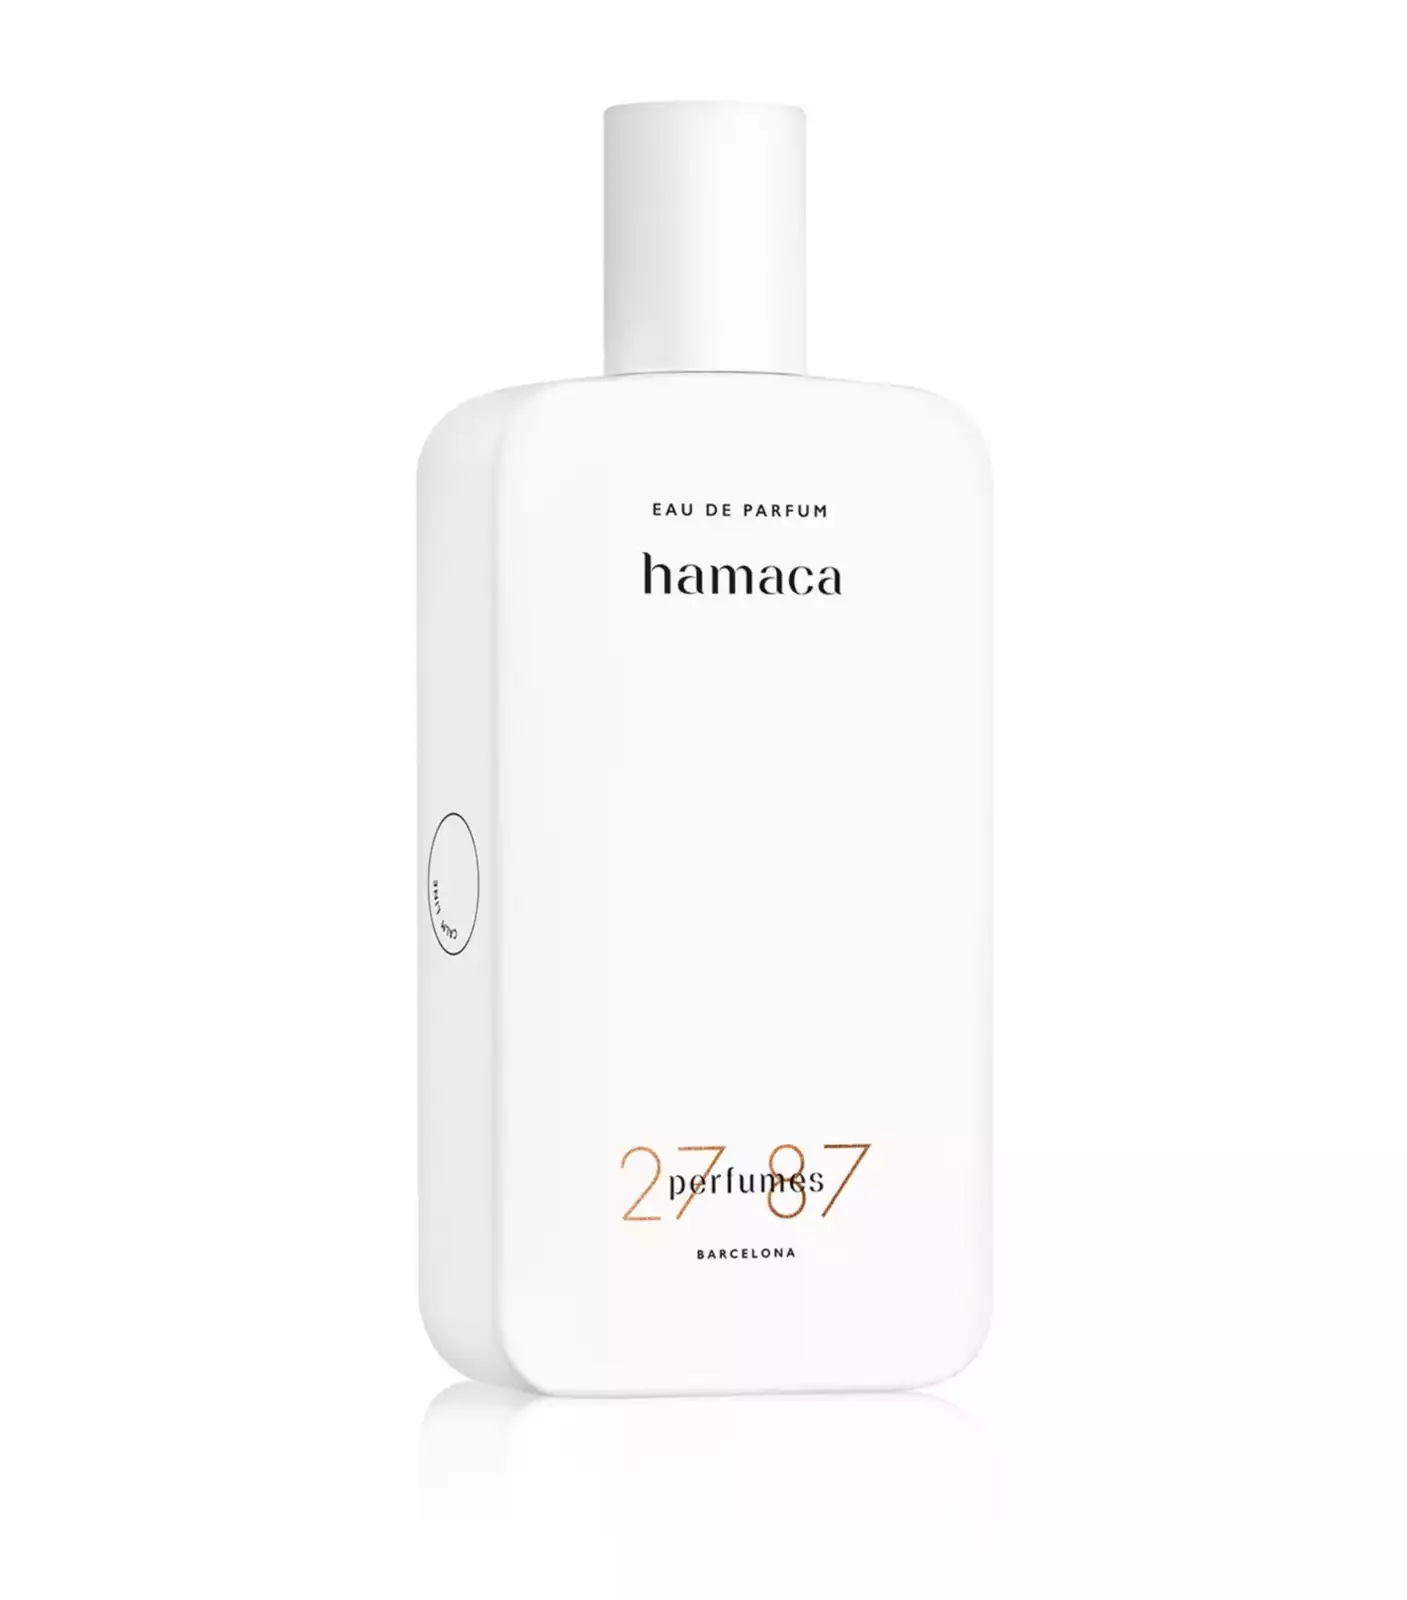 HAMACA – 27 87 parfumes